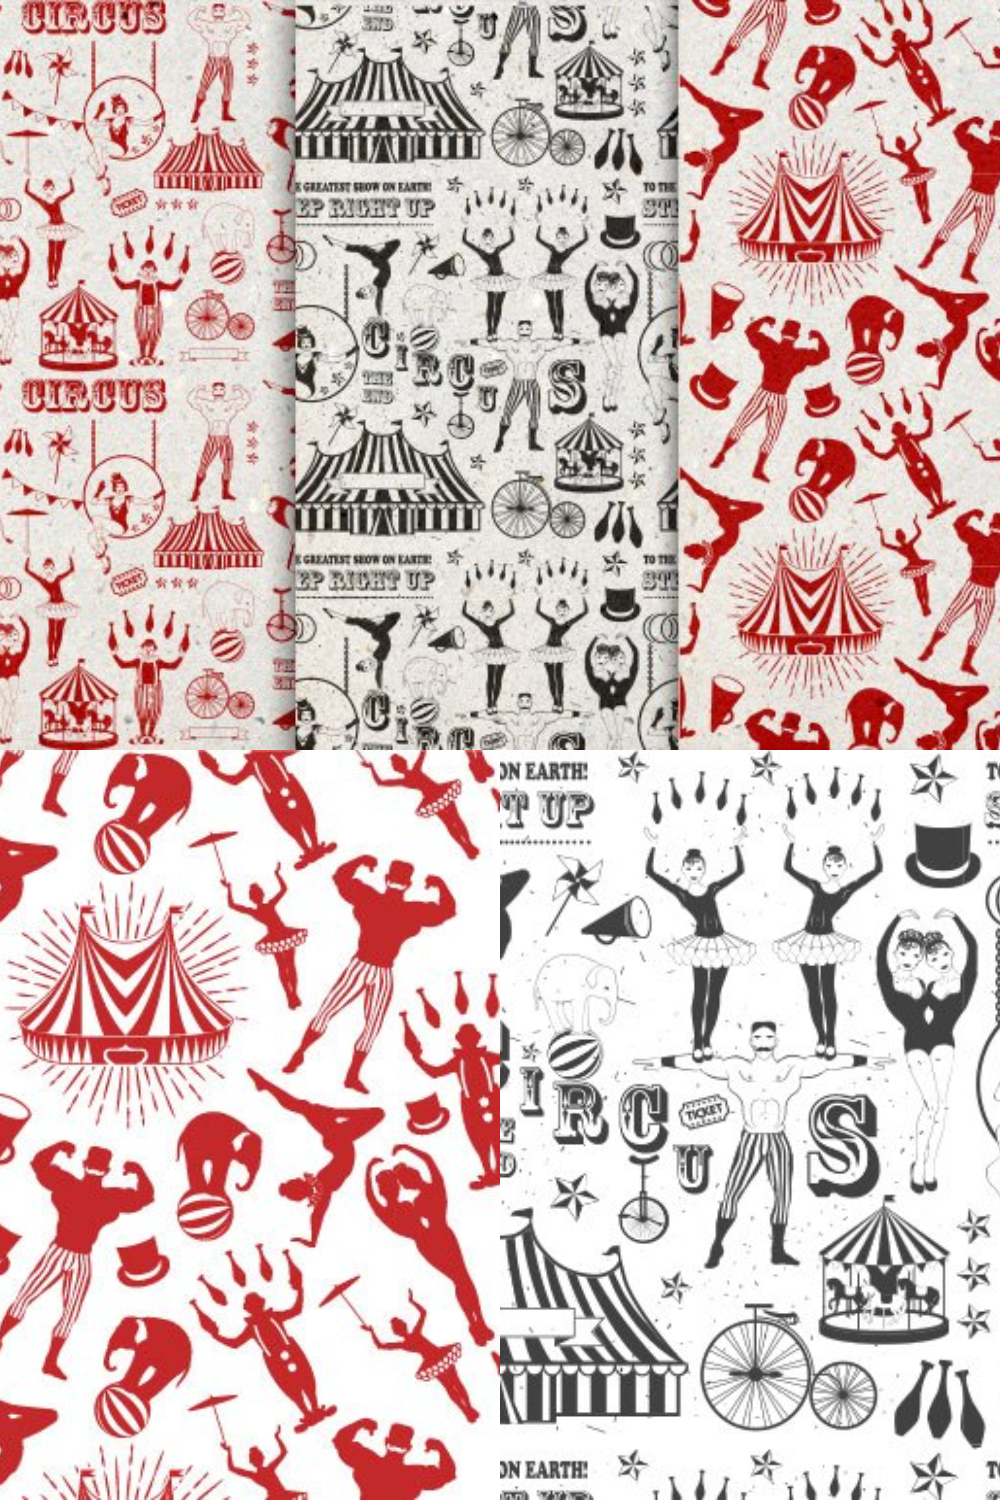 Circus Pattern - Pinterest.